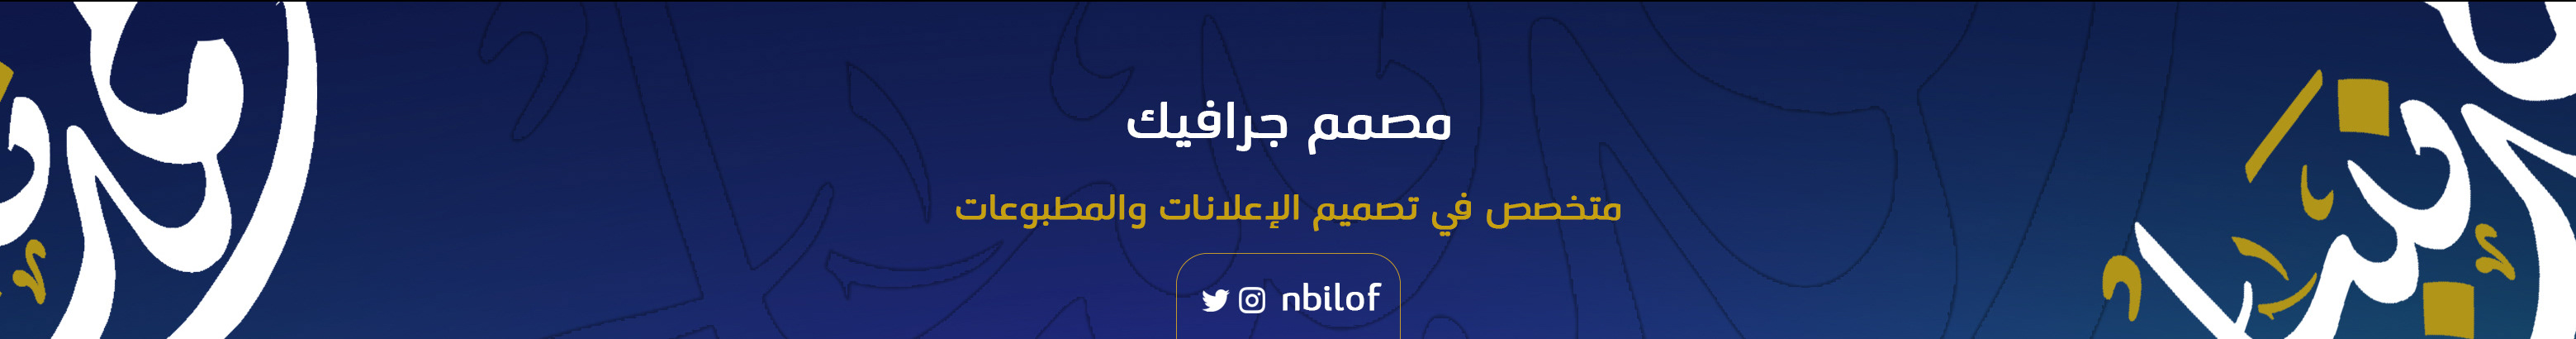 Ahmed Nabil's profile banner